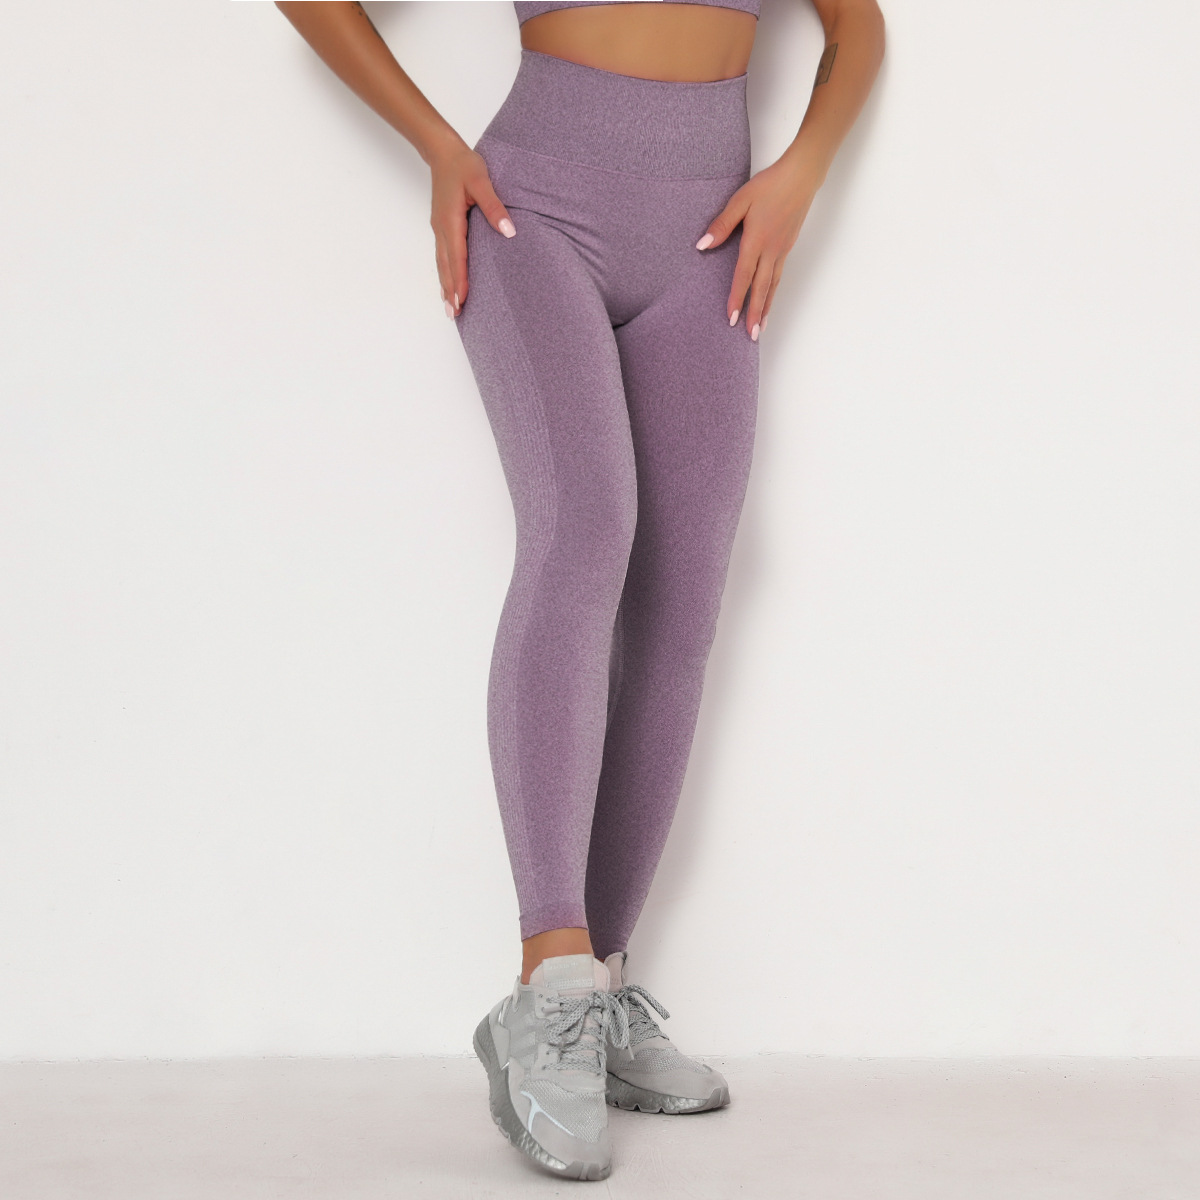 red purple seamless yoga leggings high waist gym pants